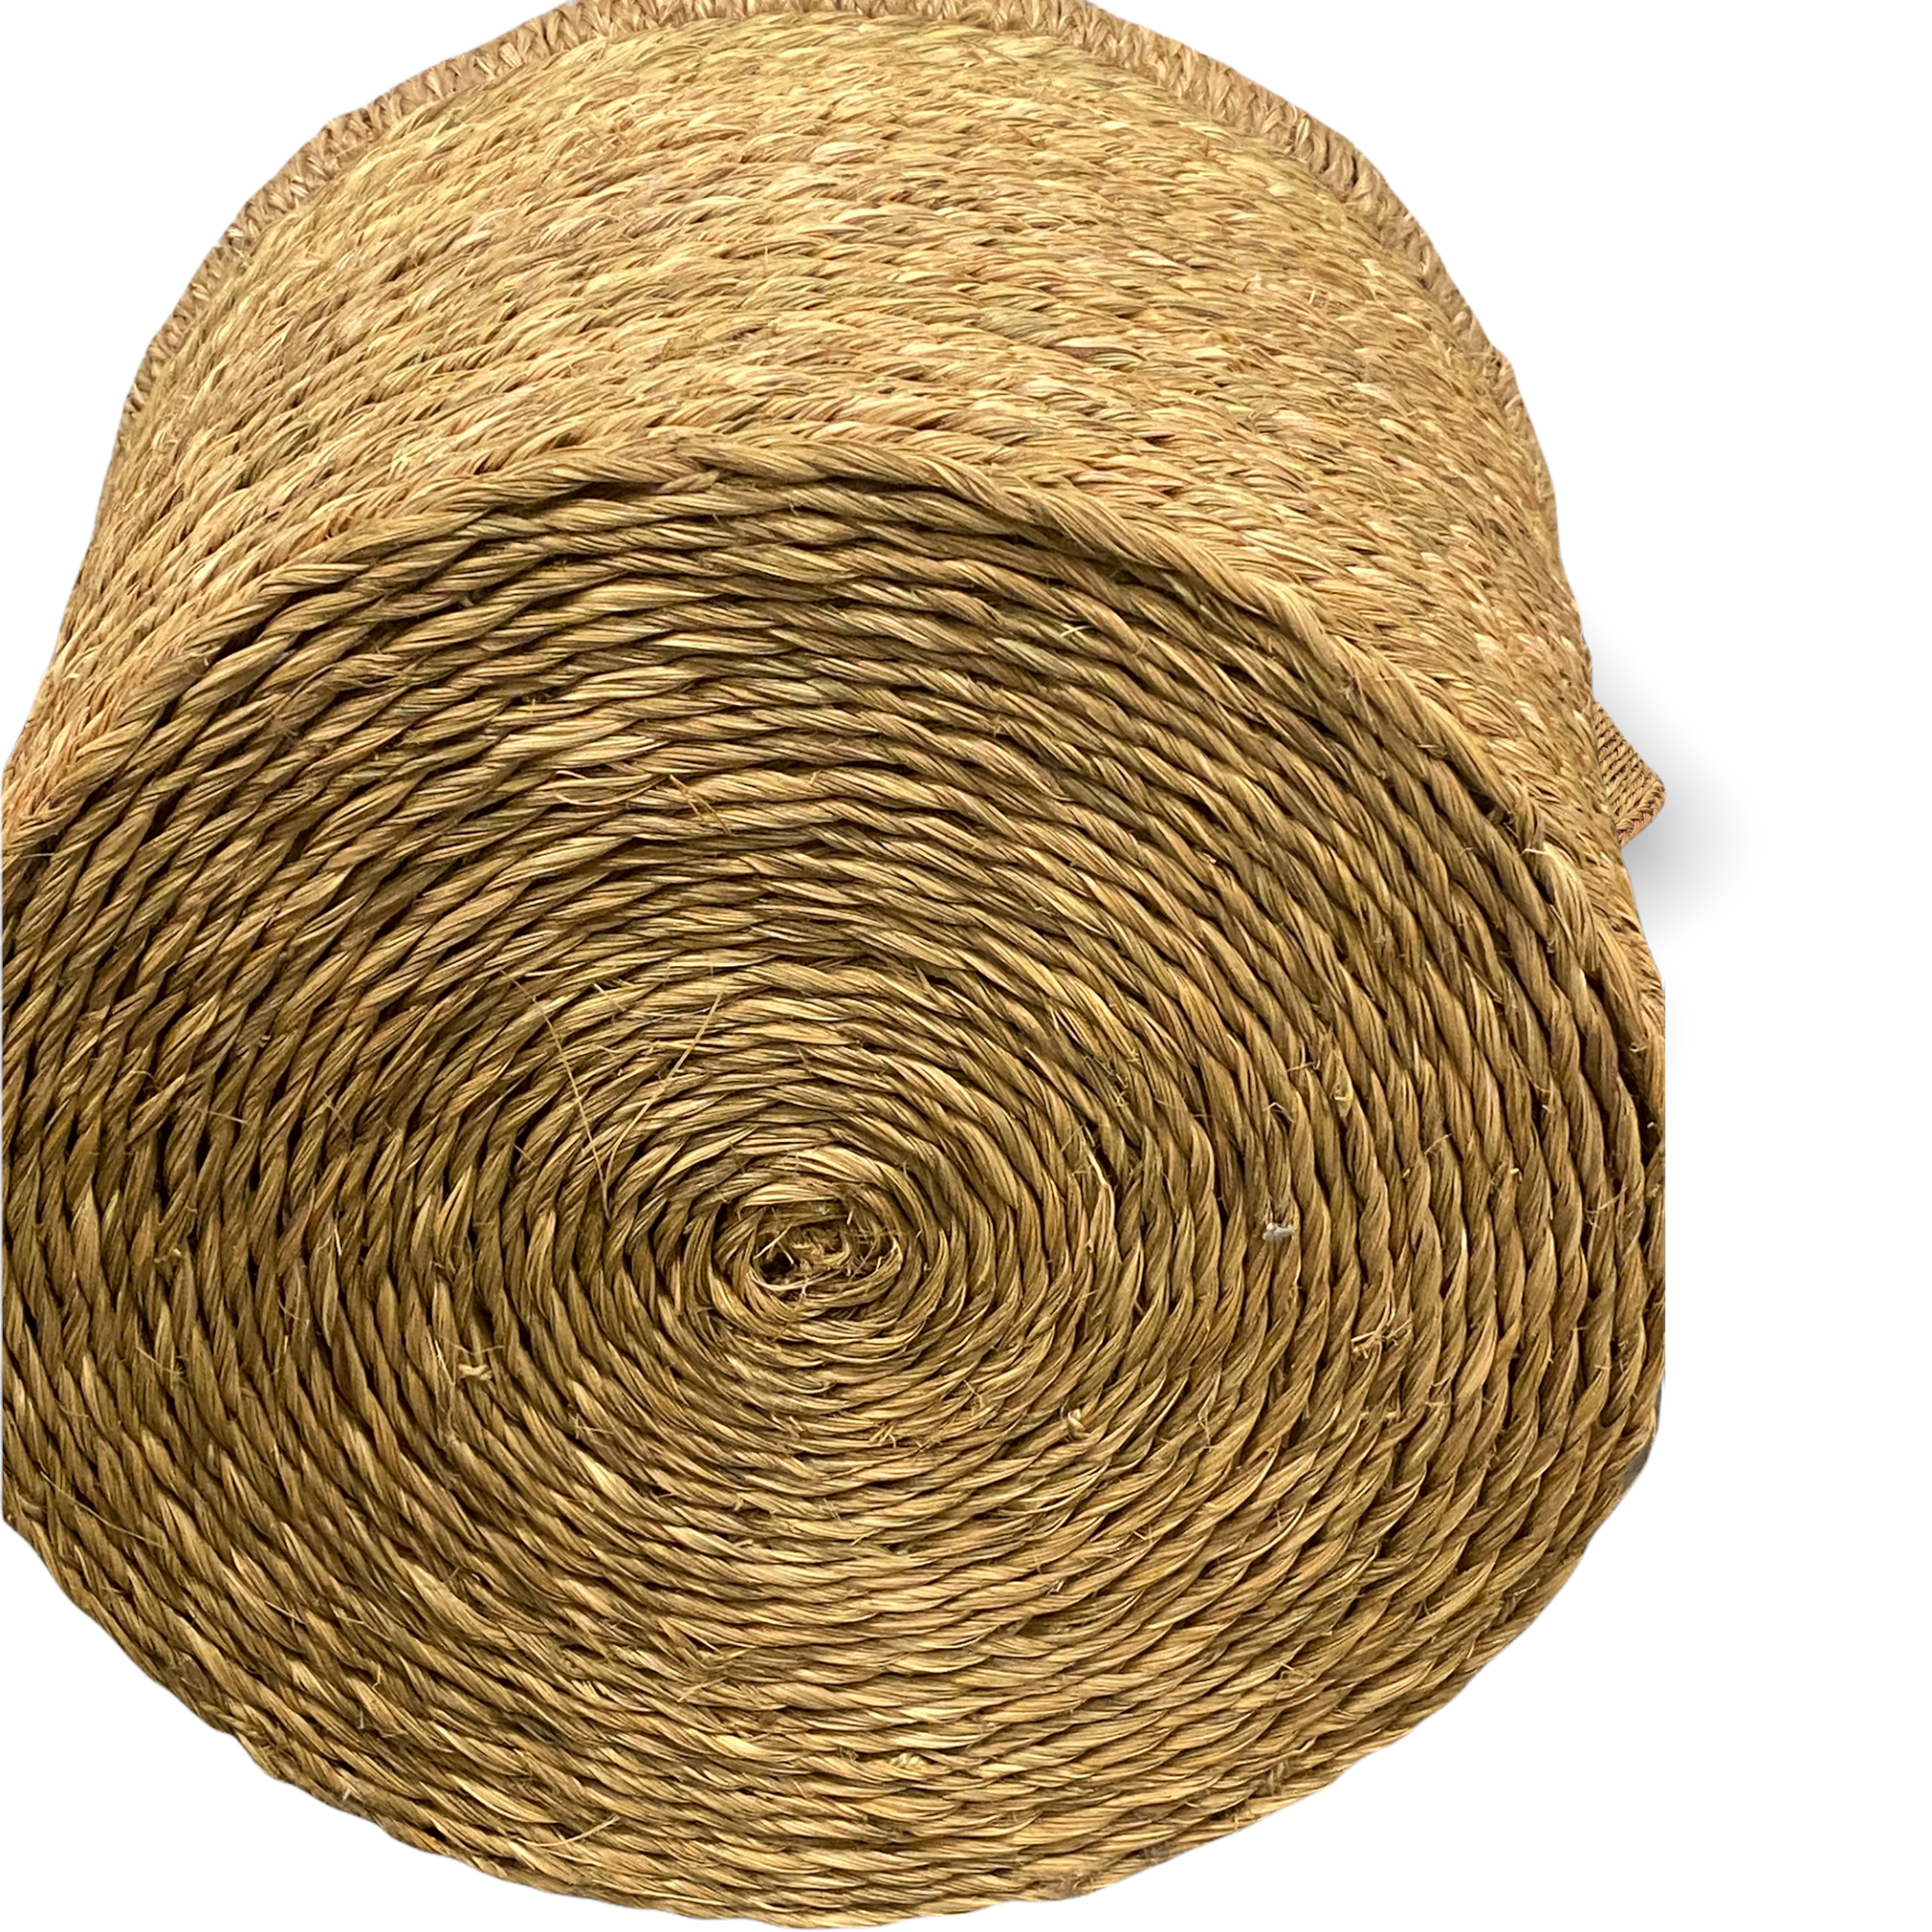 Lutindzi hand woven grass basket- Swaziland